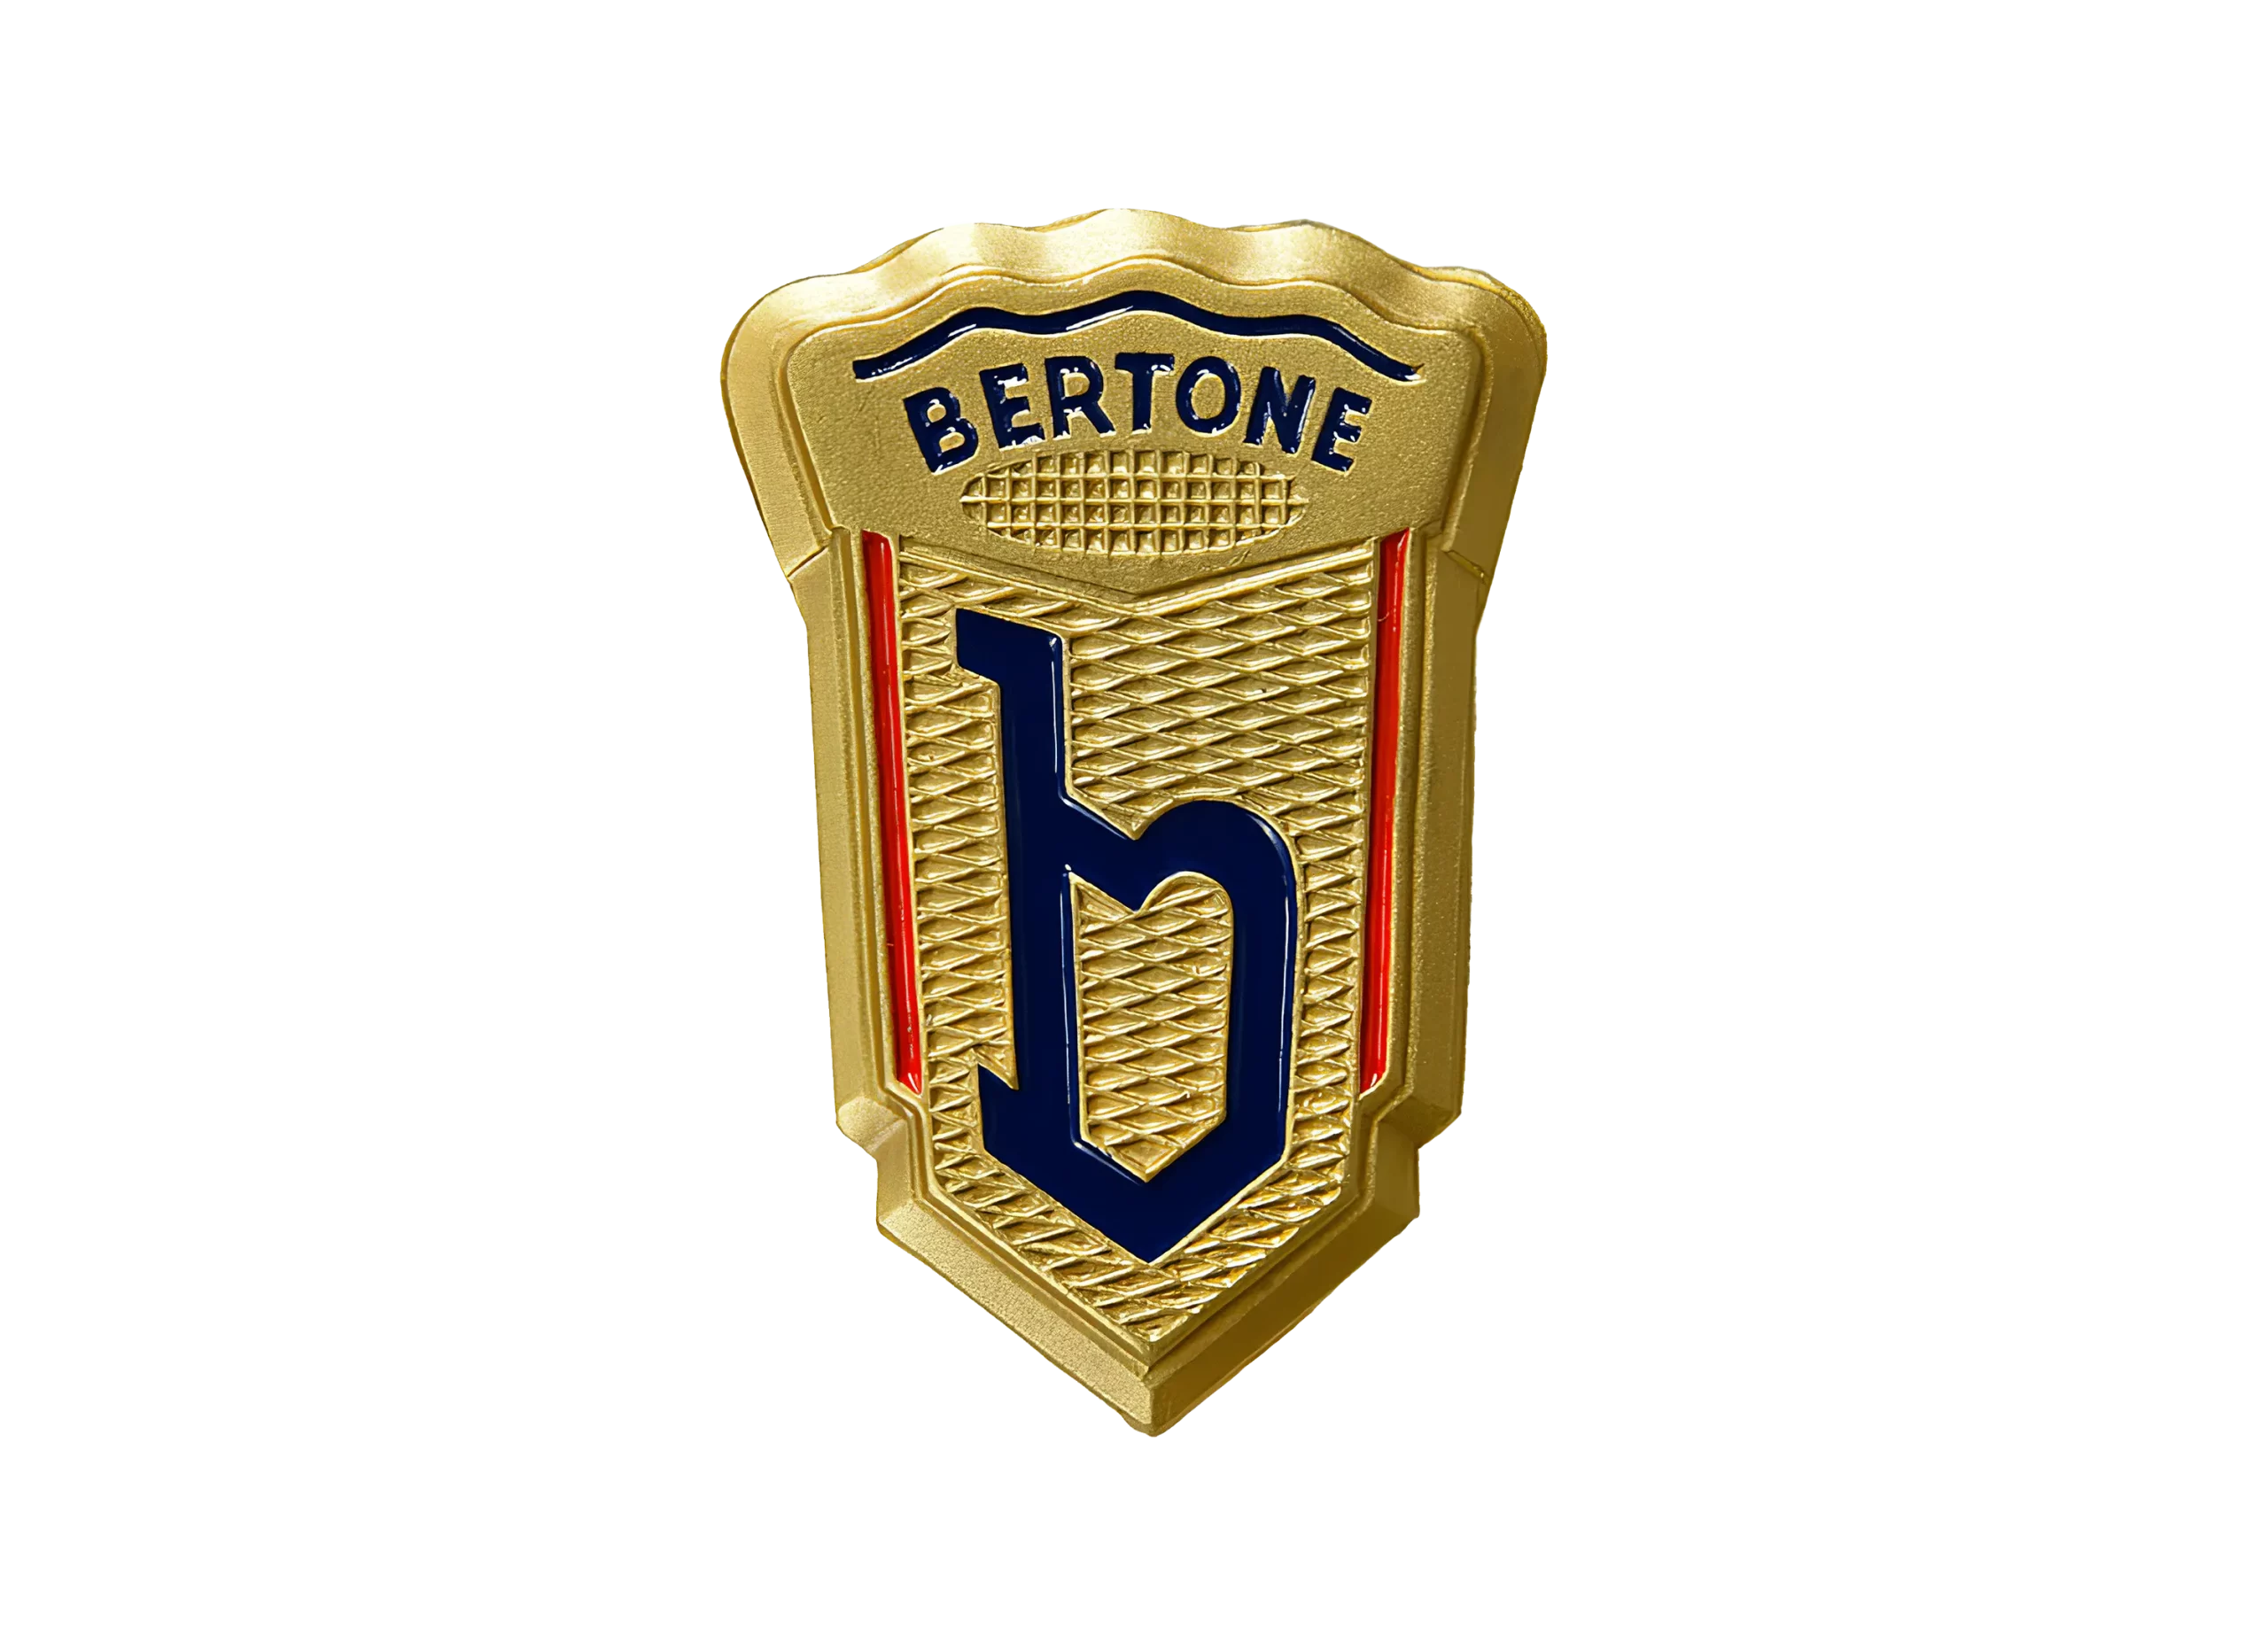 Bertone logo 1912-1998